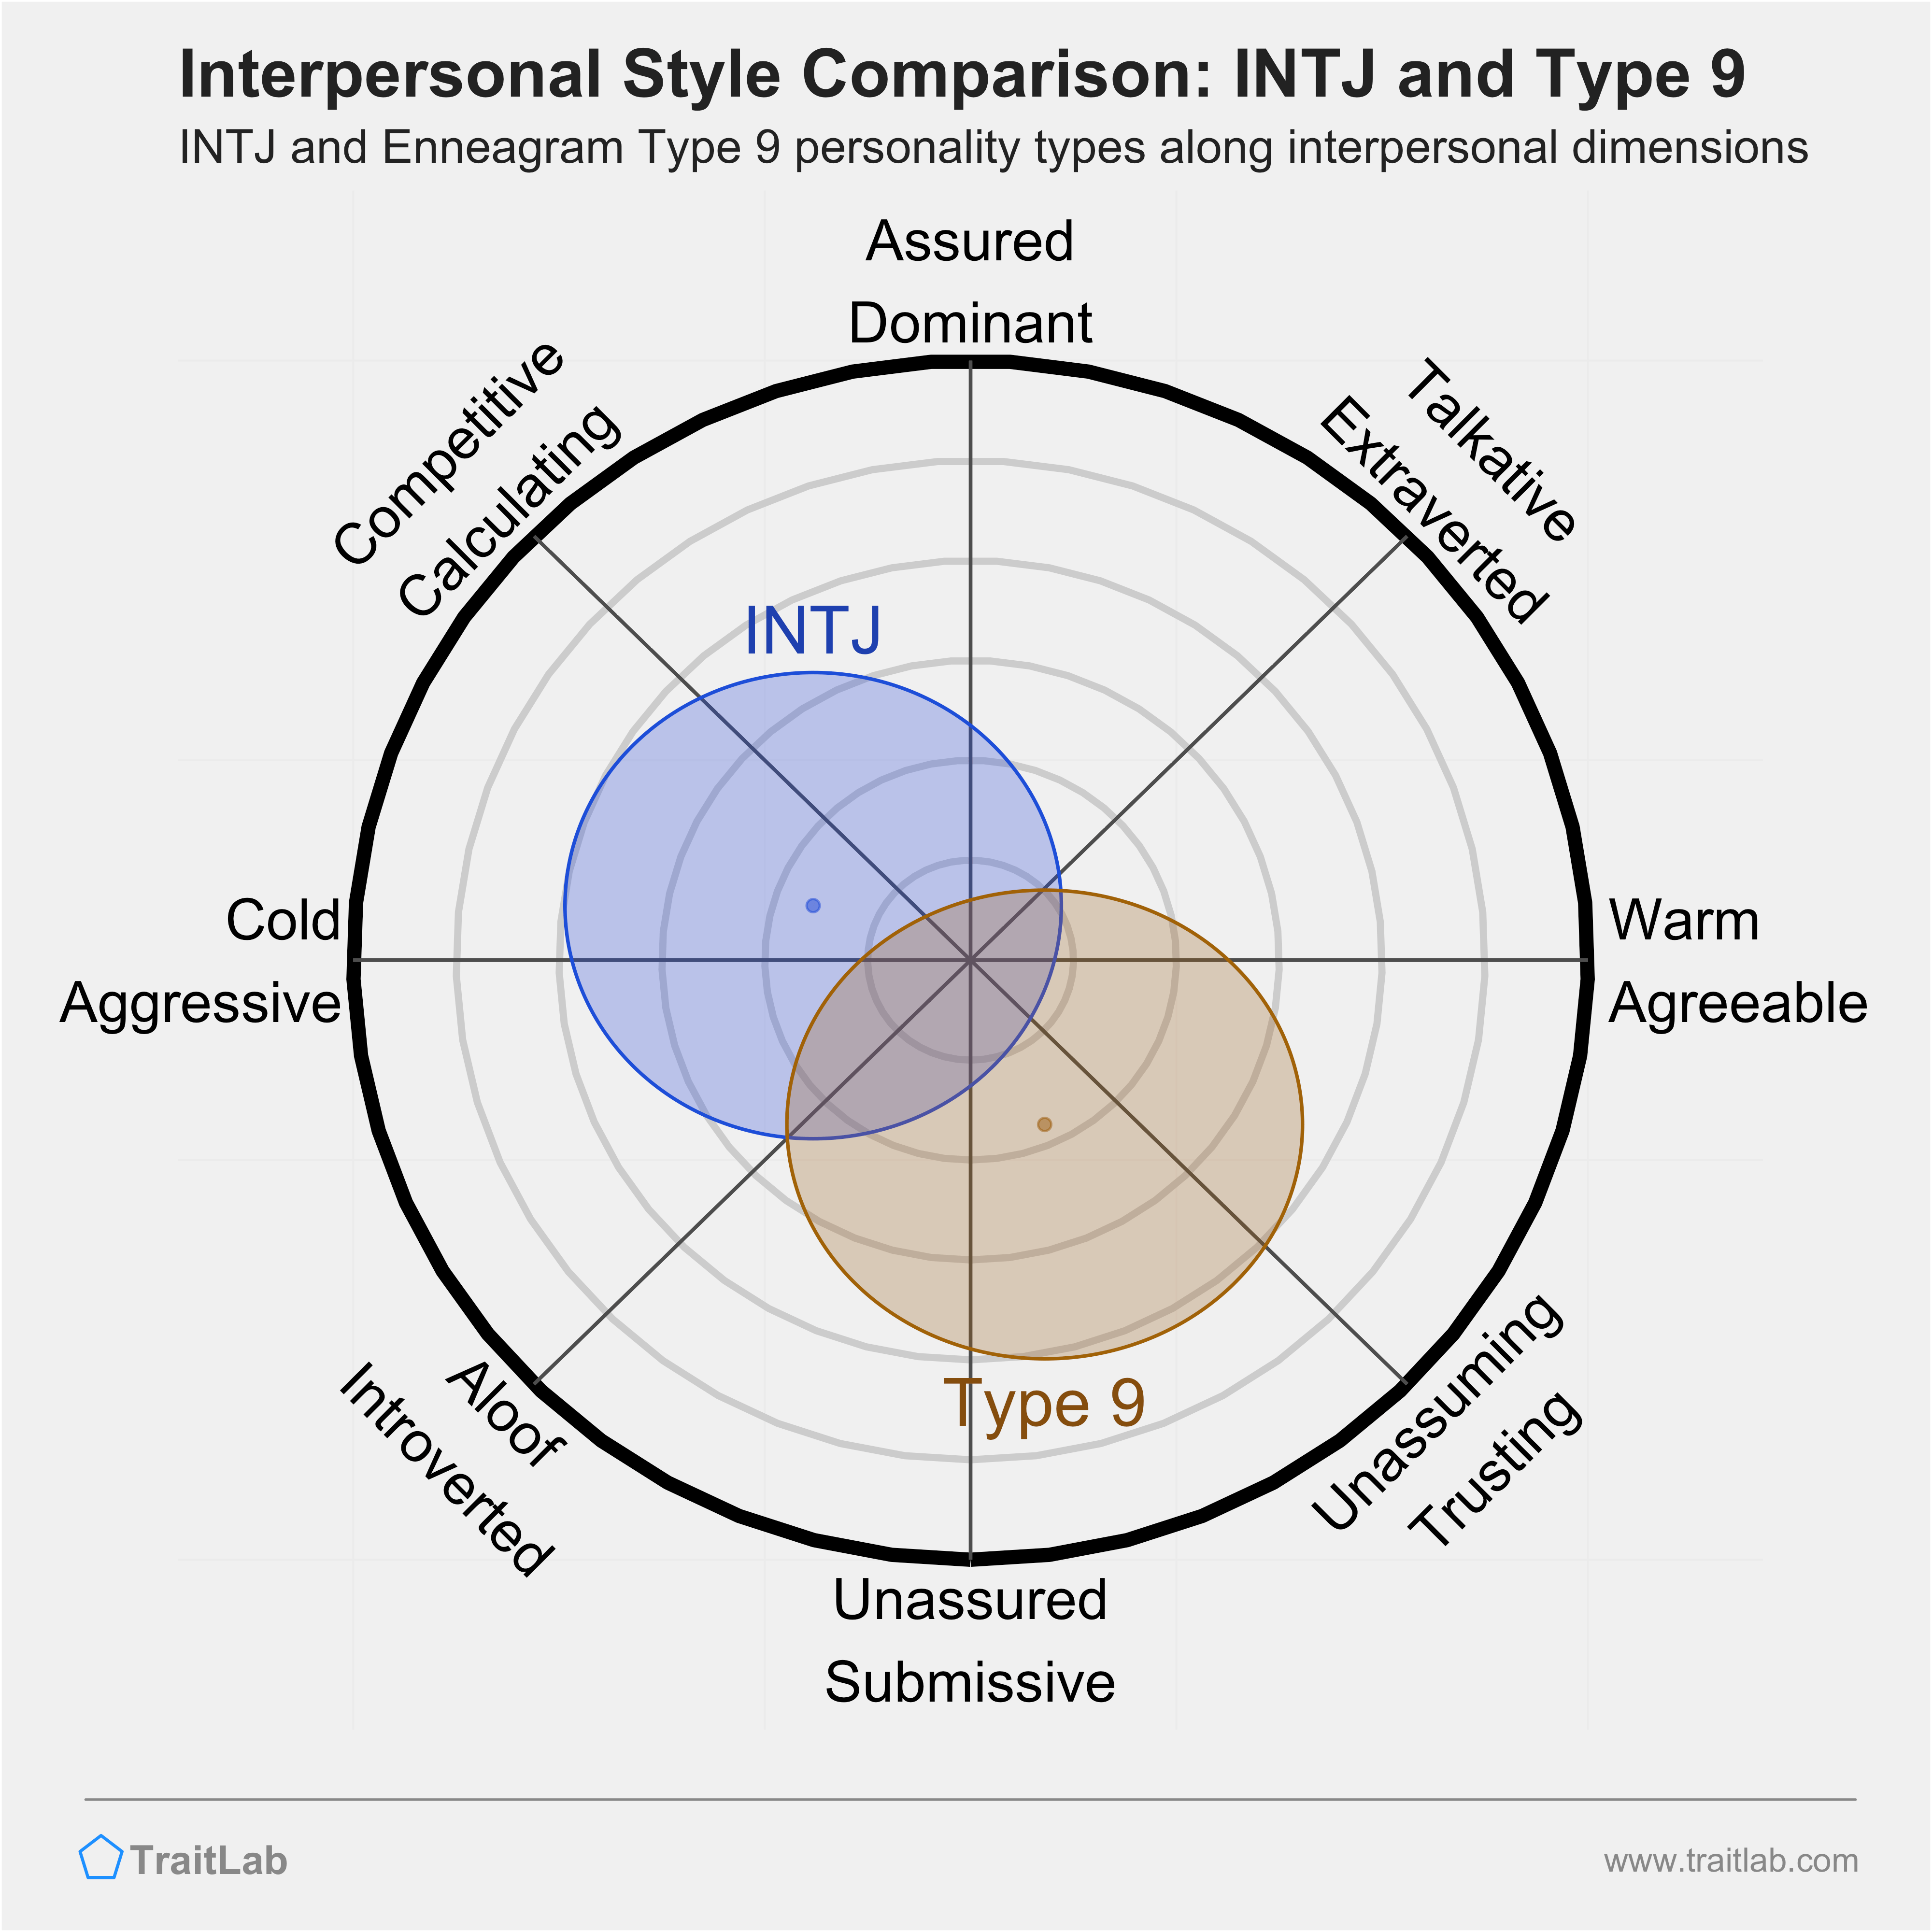 Enneagram INTJ and Type 9 comparison across interpersonal dimensions